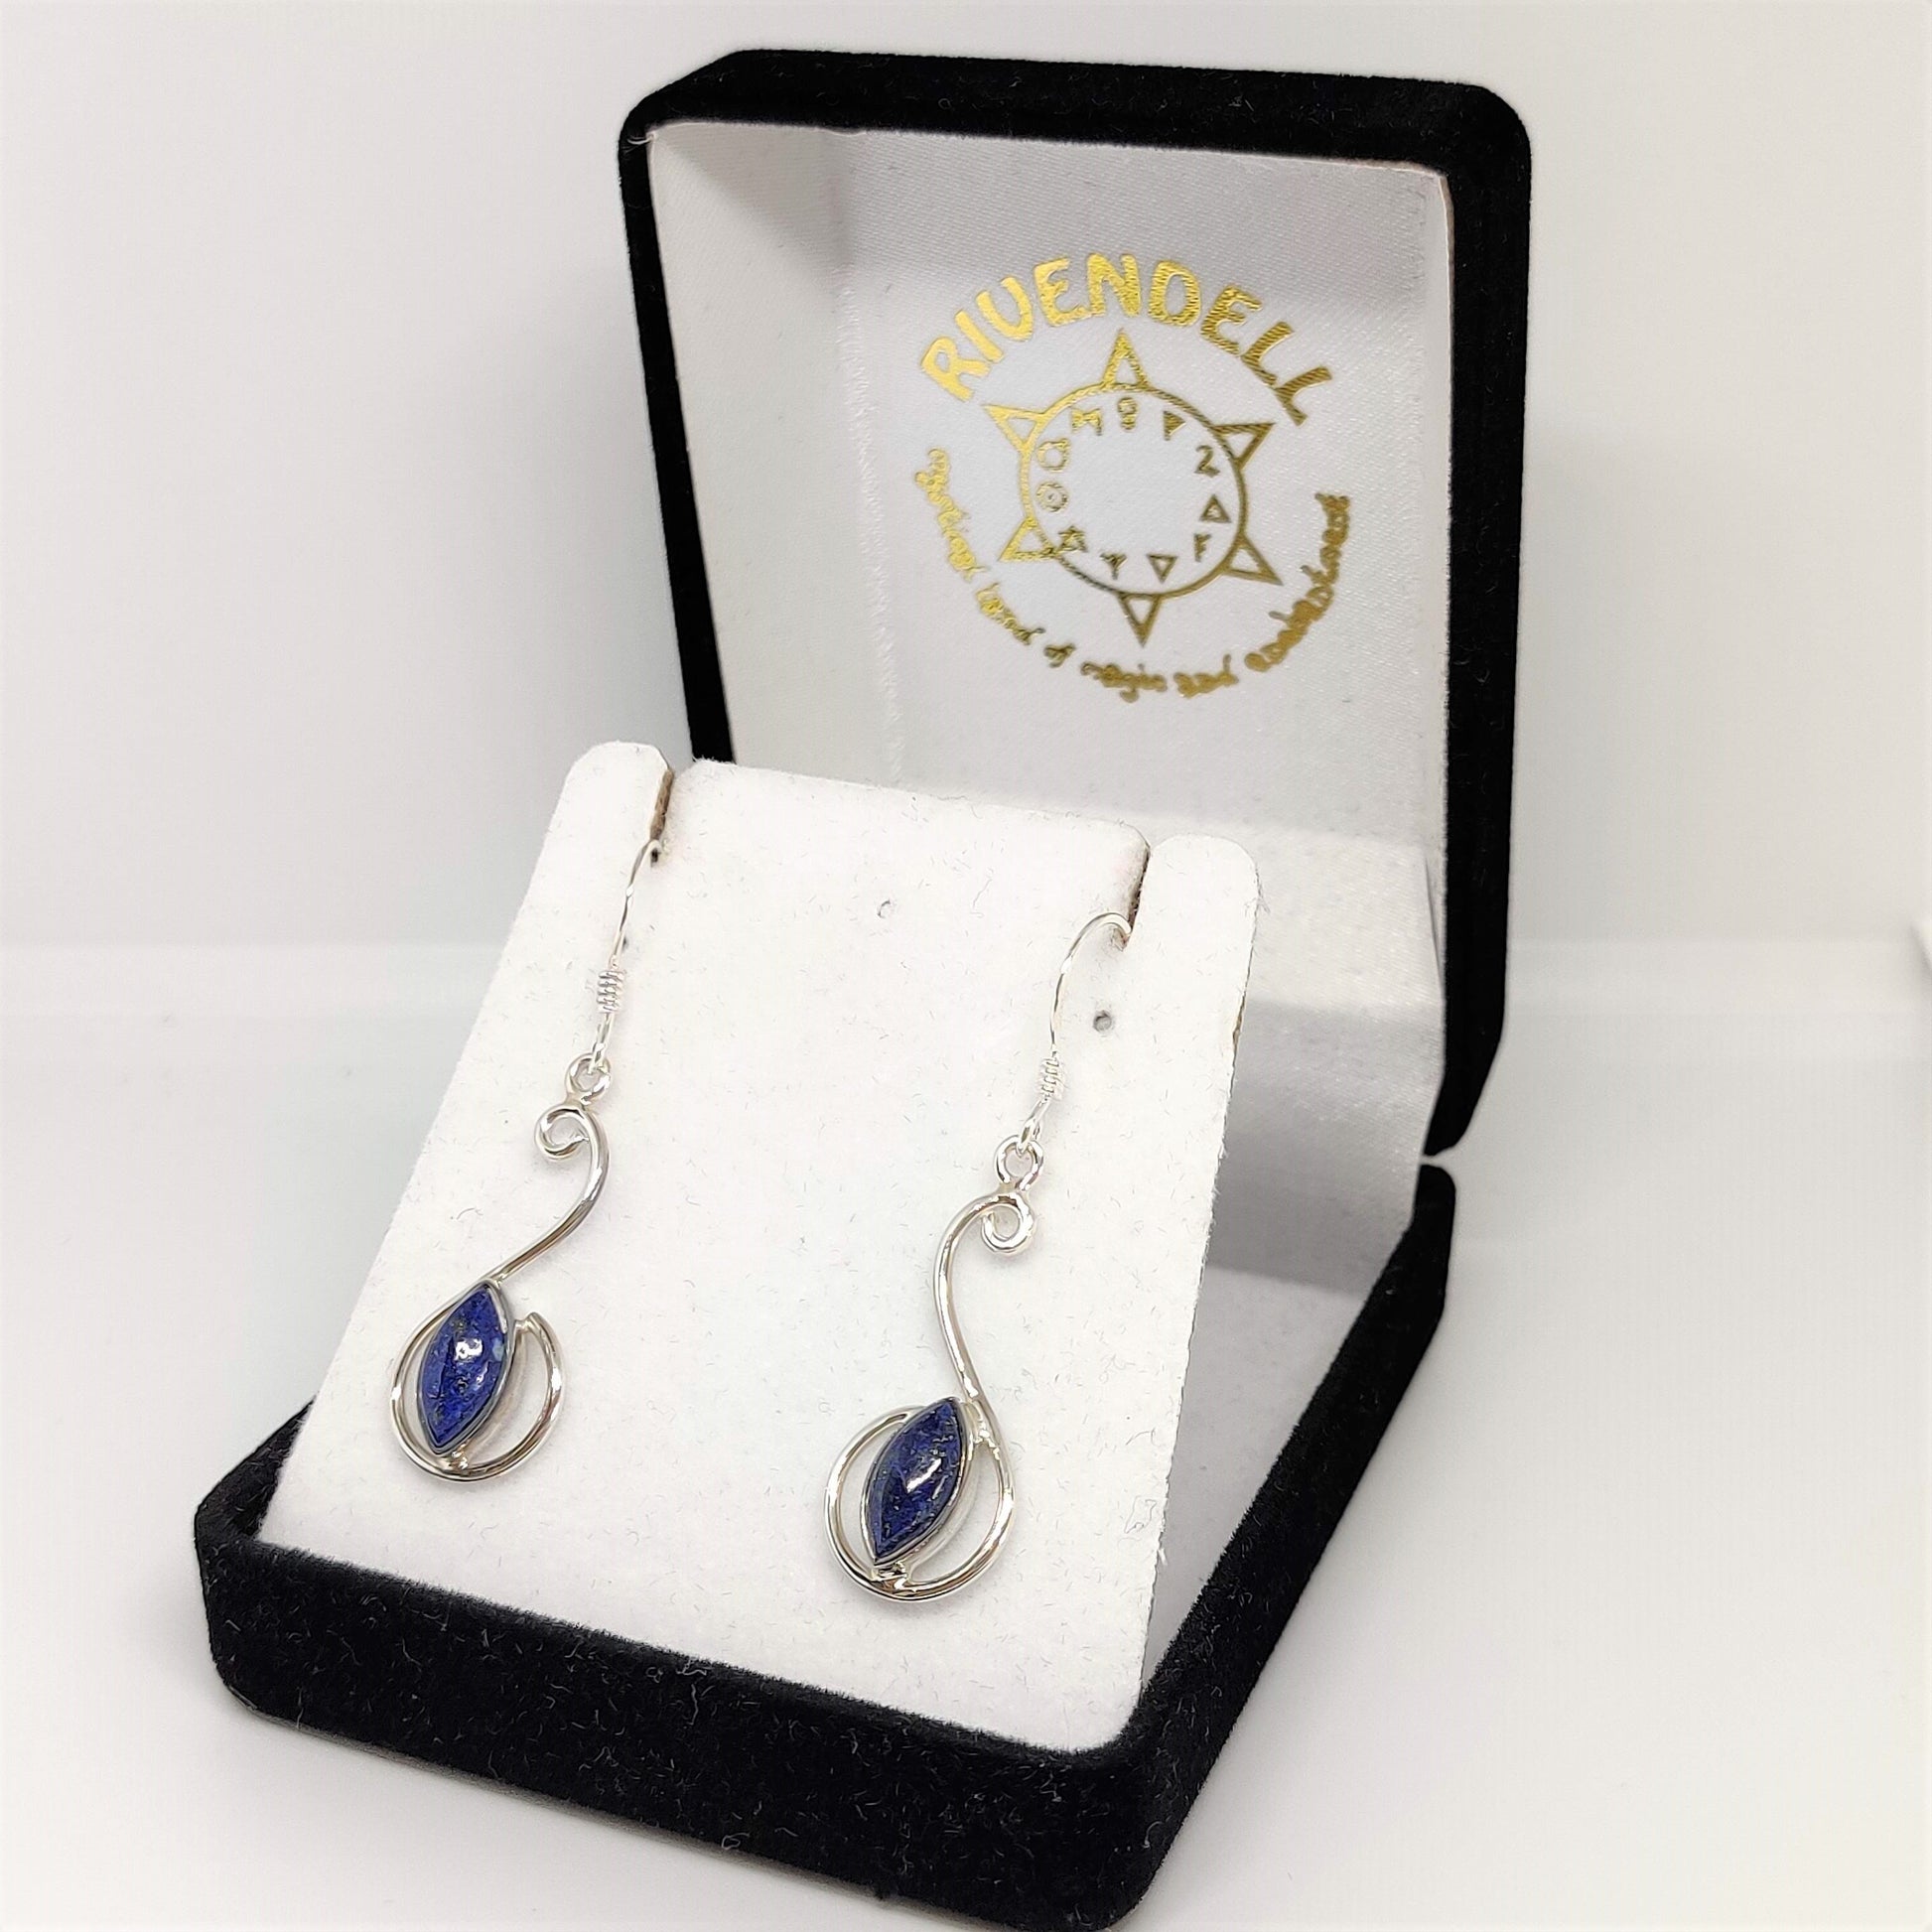 Almond Lapis Lazuli 925 Sterling Silver Dangle Earrings - Rivendell Shop